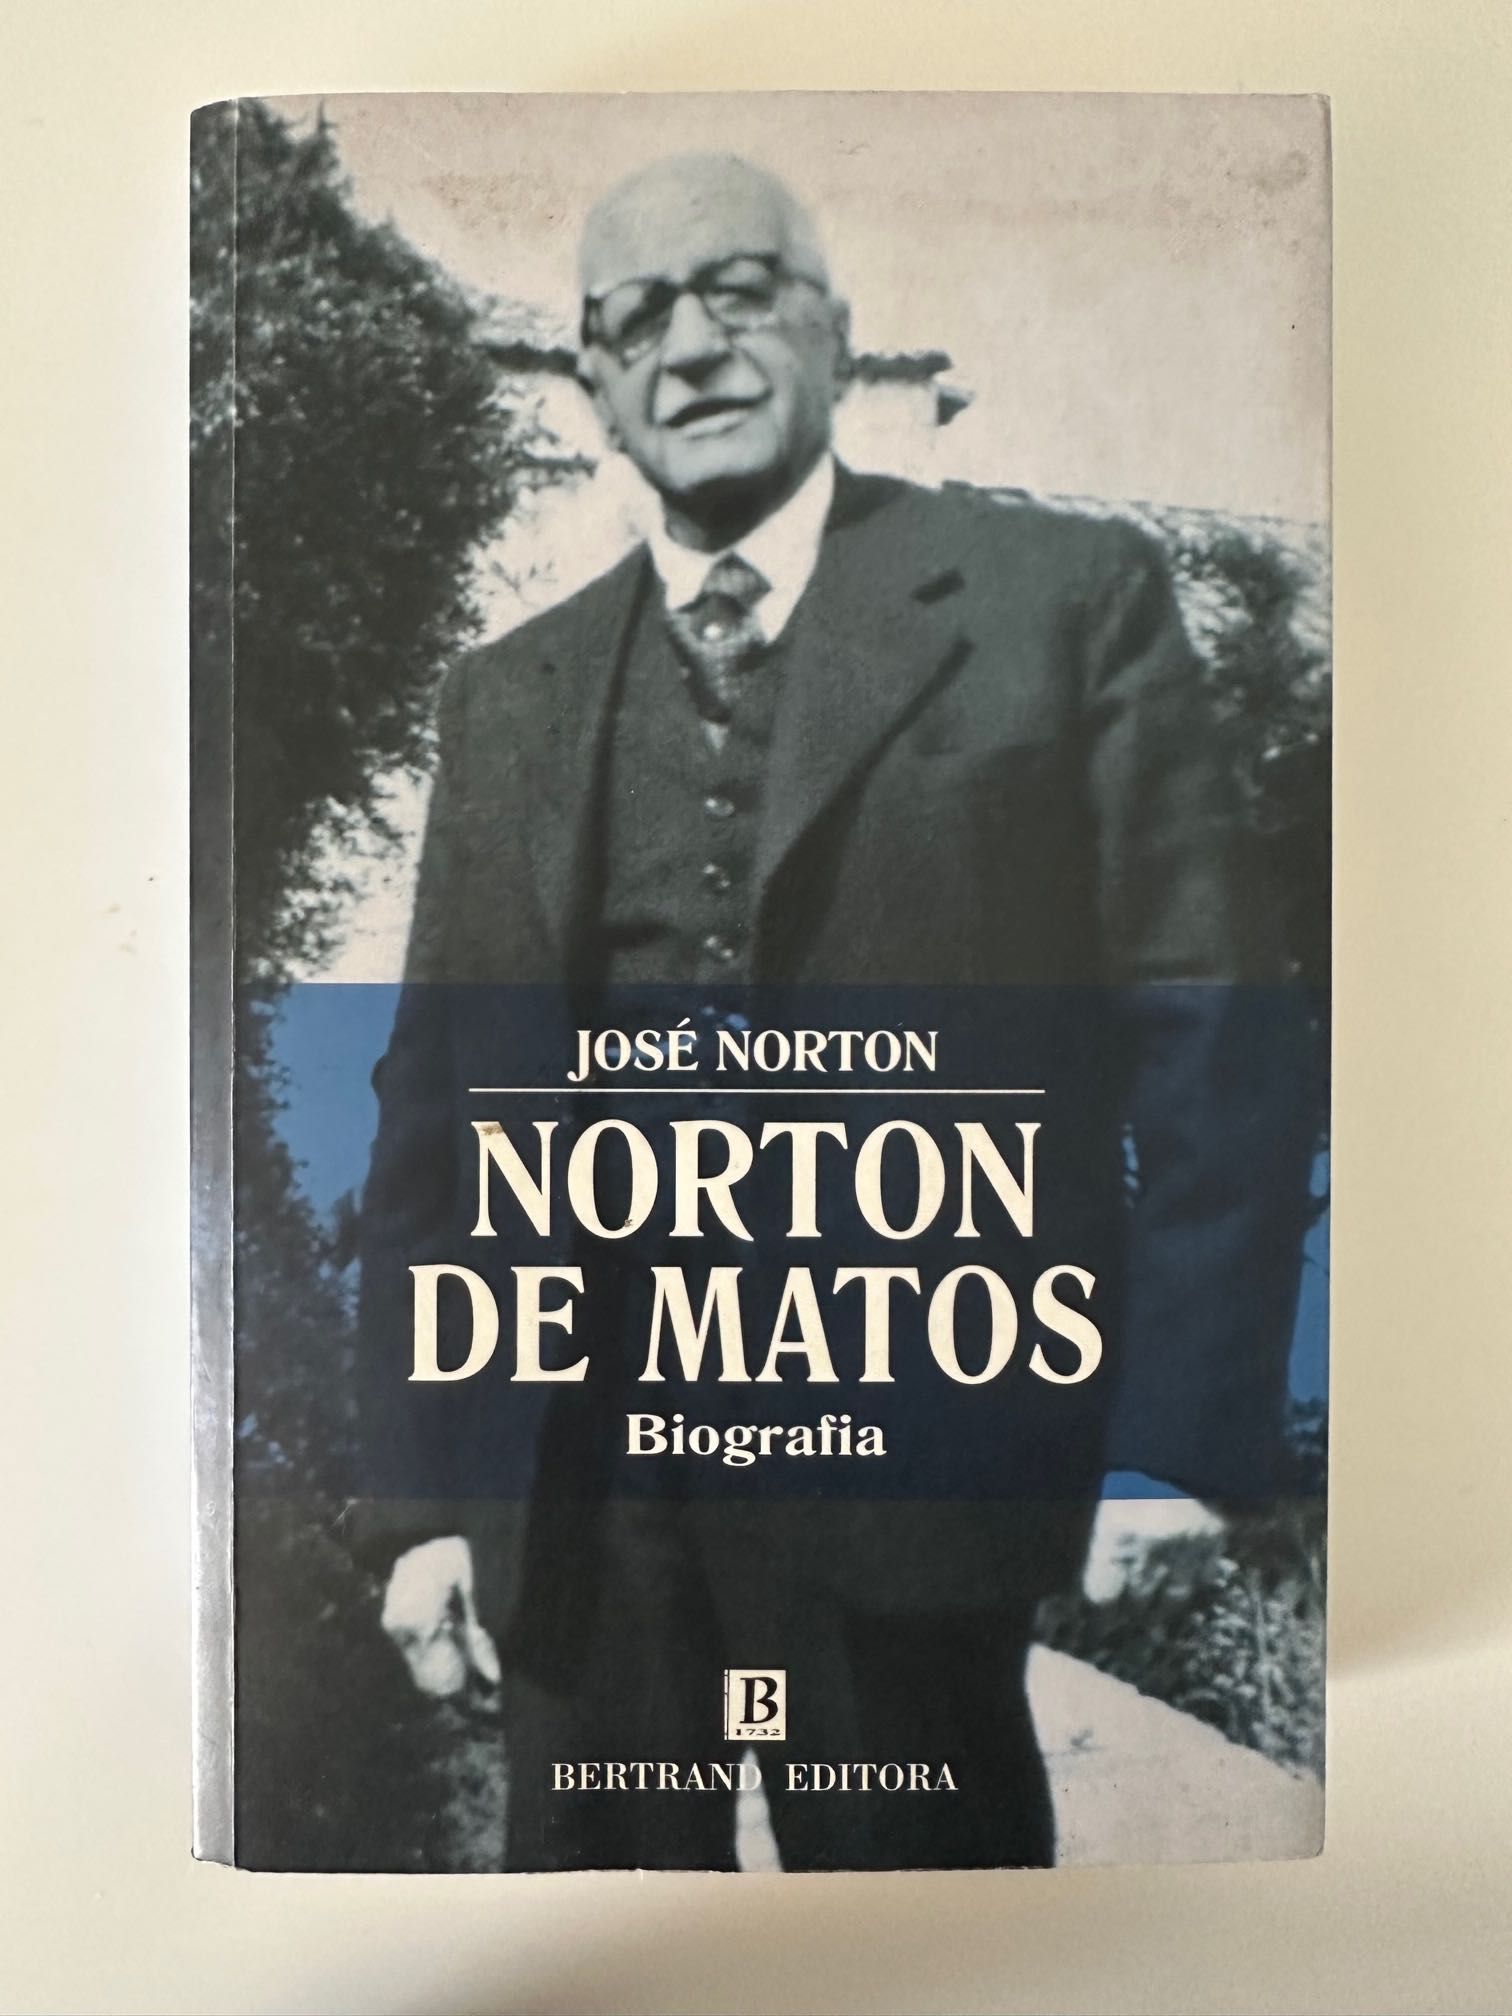 Norton de Matos. Biografia - José Norton - 2002